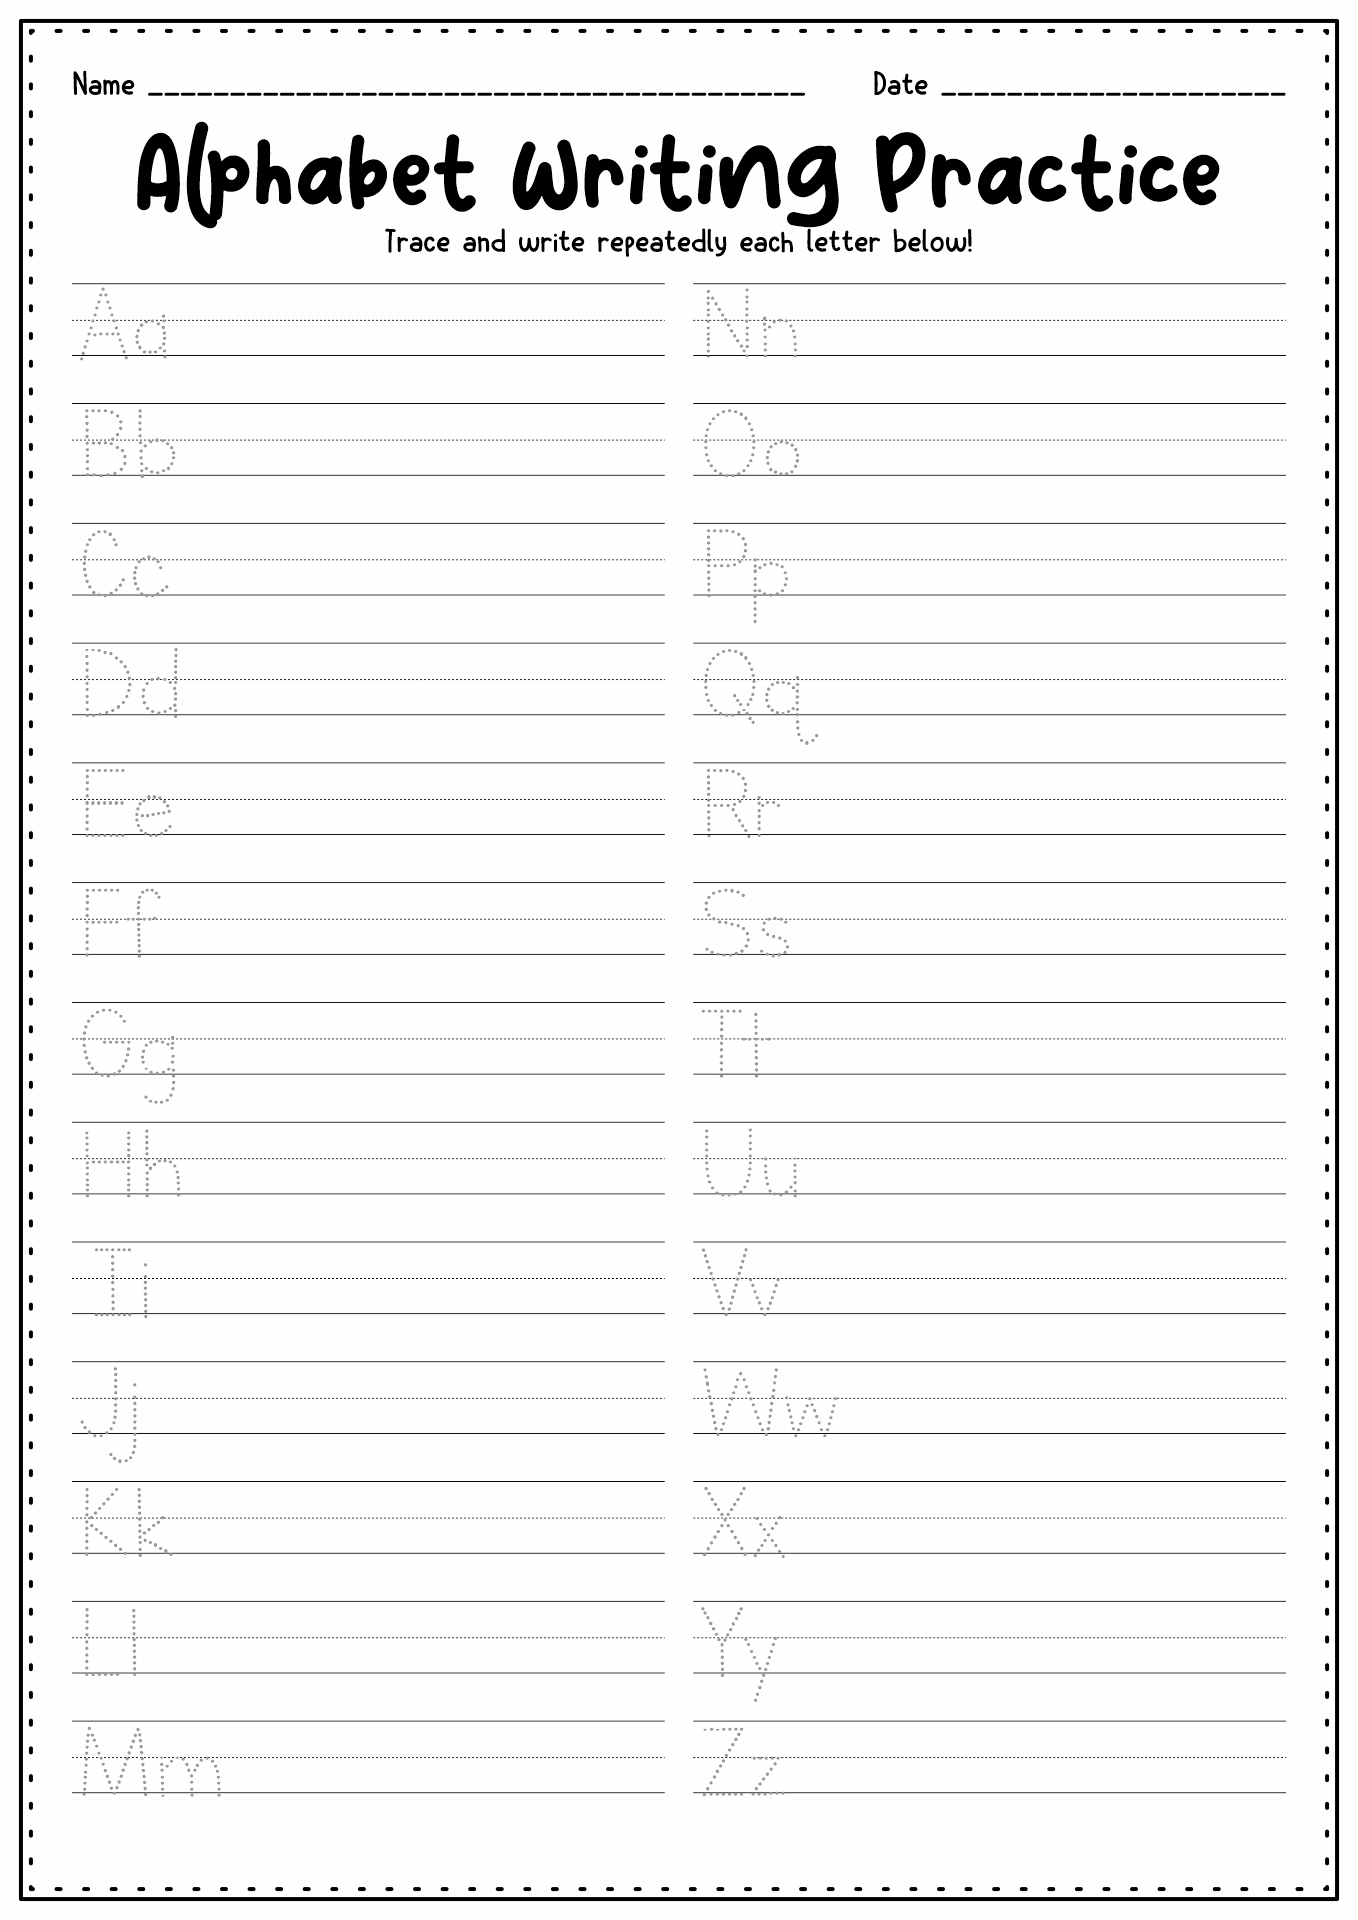 handwriting-letters-worksheets